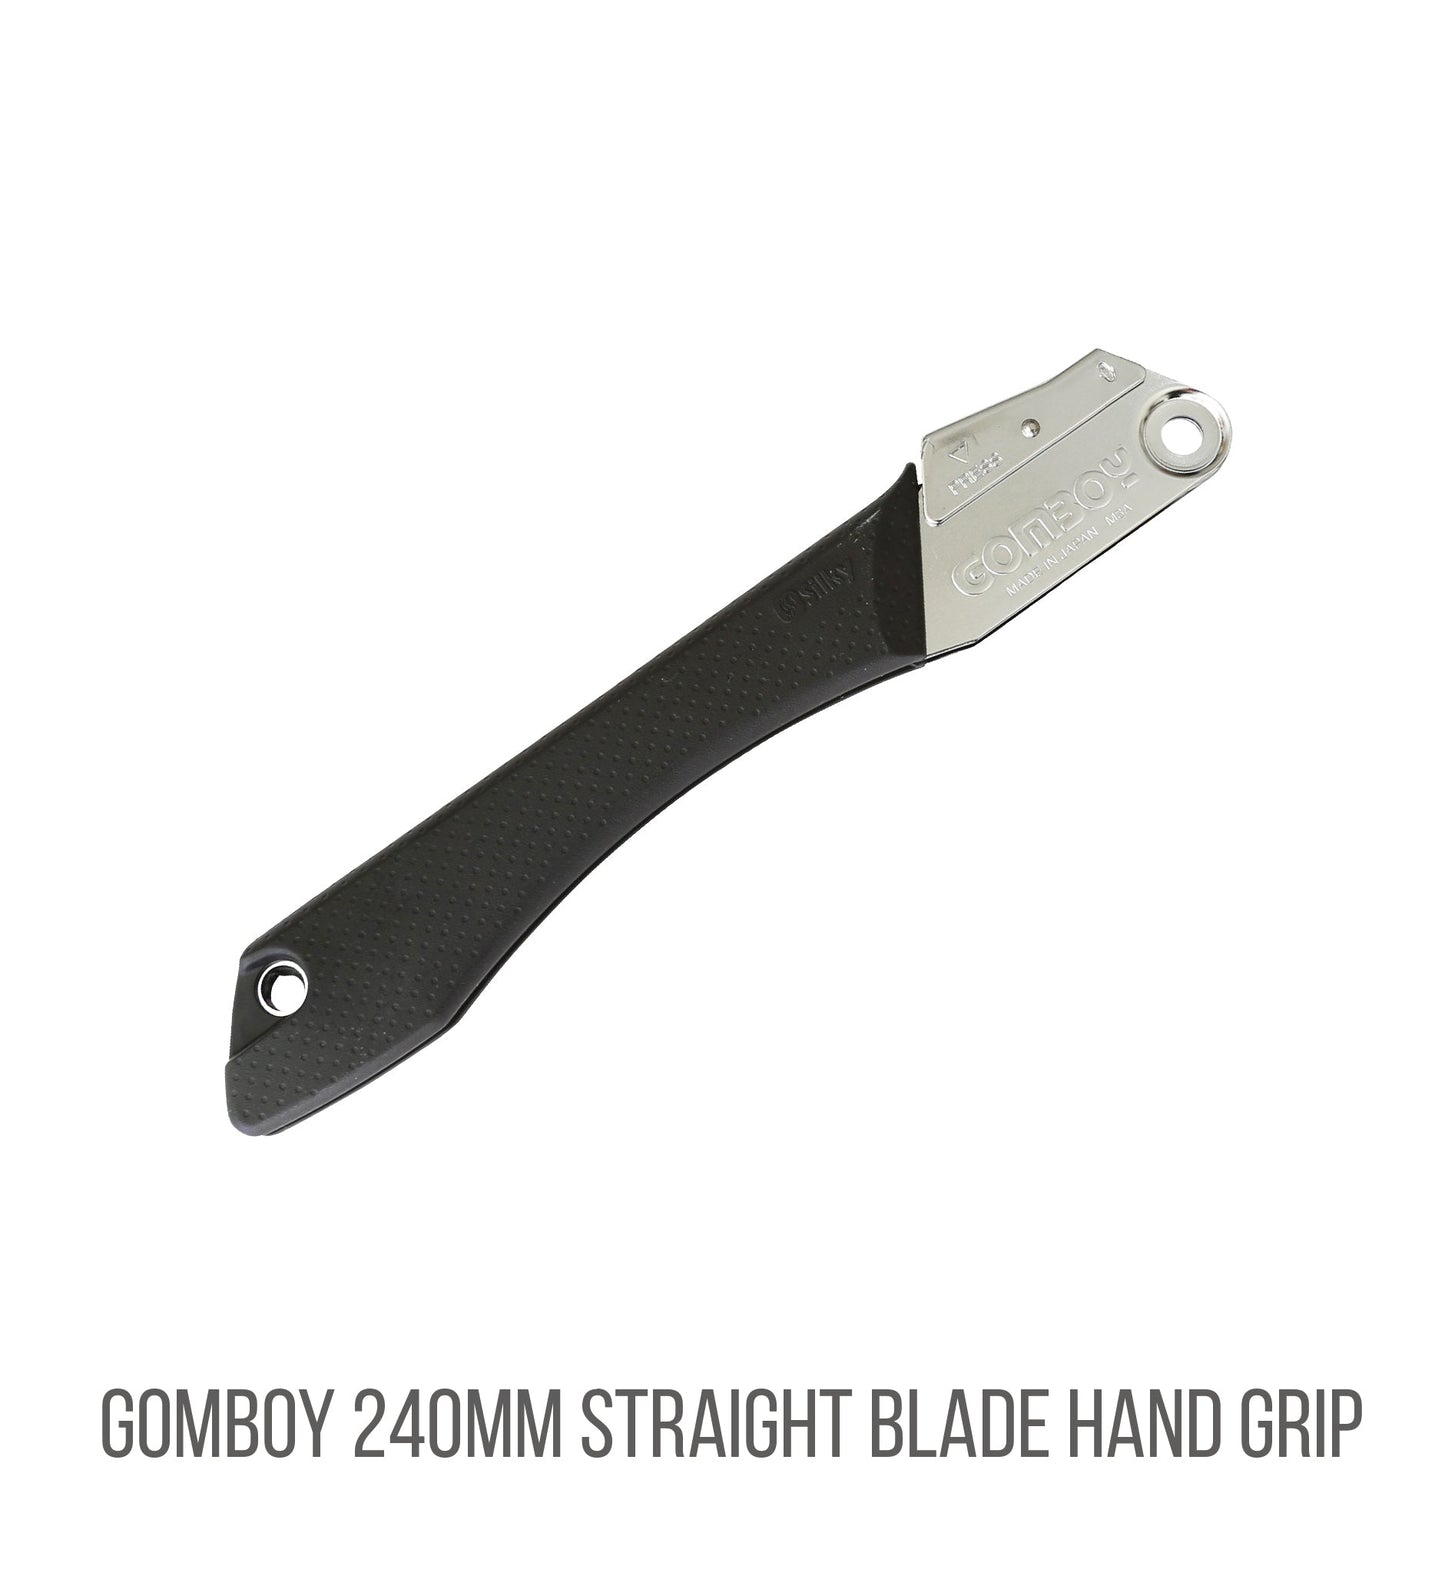 HAND GRIPS - Gomboy